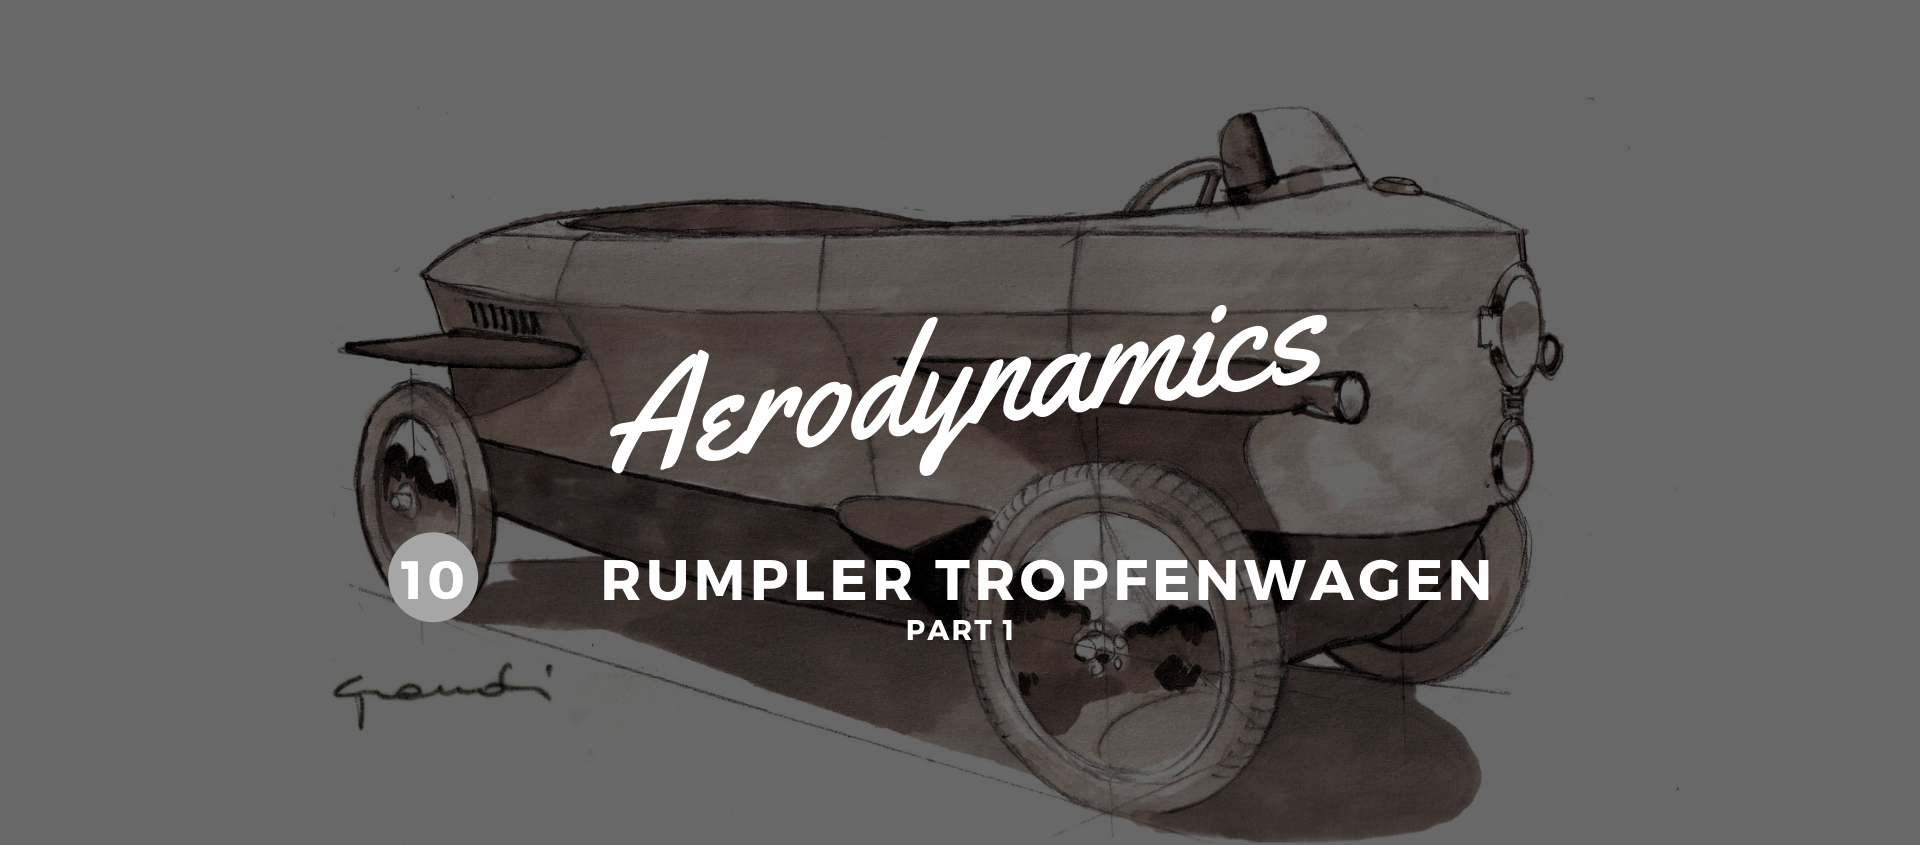 Rumpler Tropfenwagen. From the seaplane to the road image